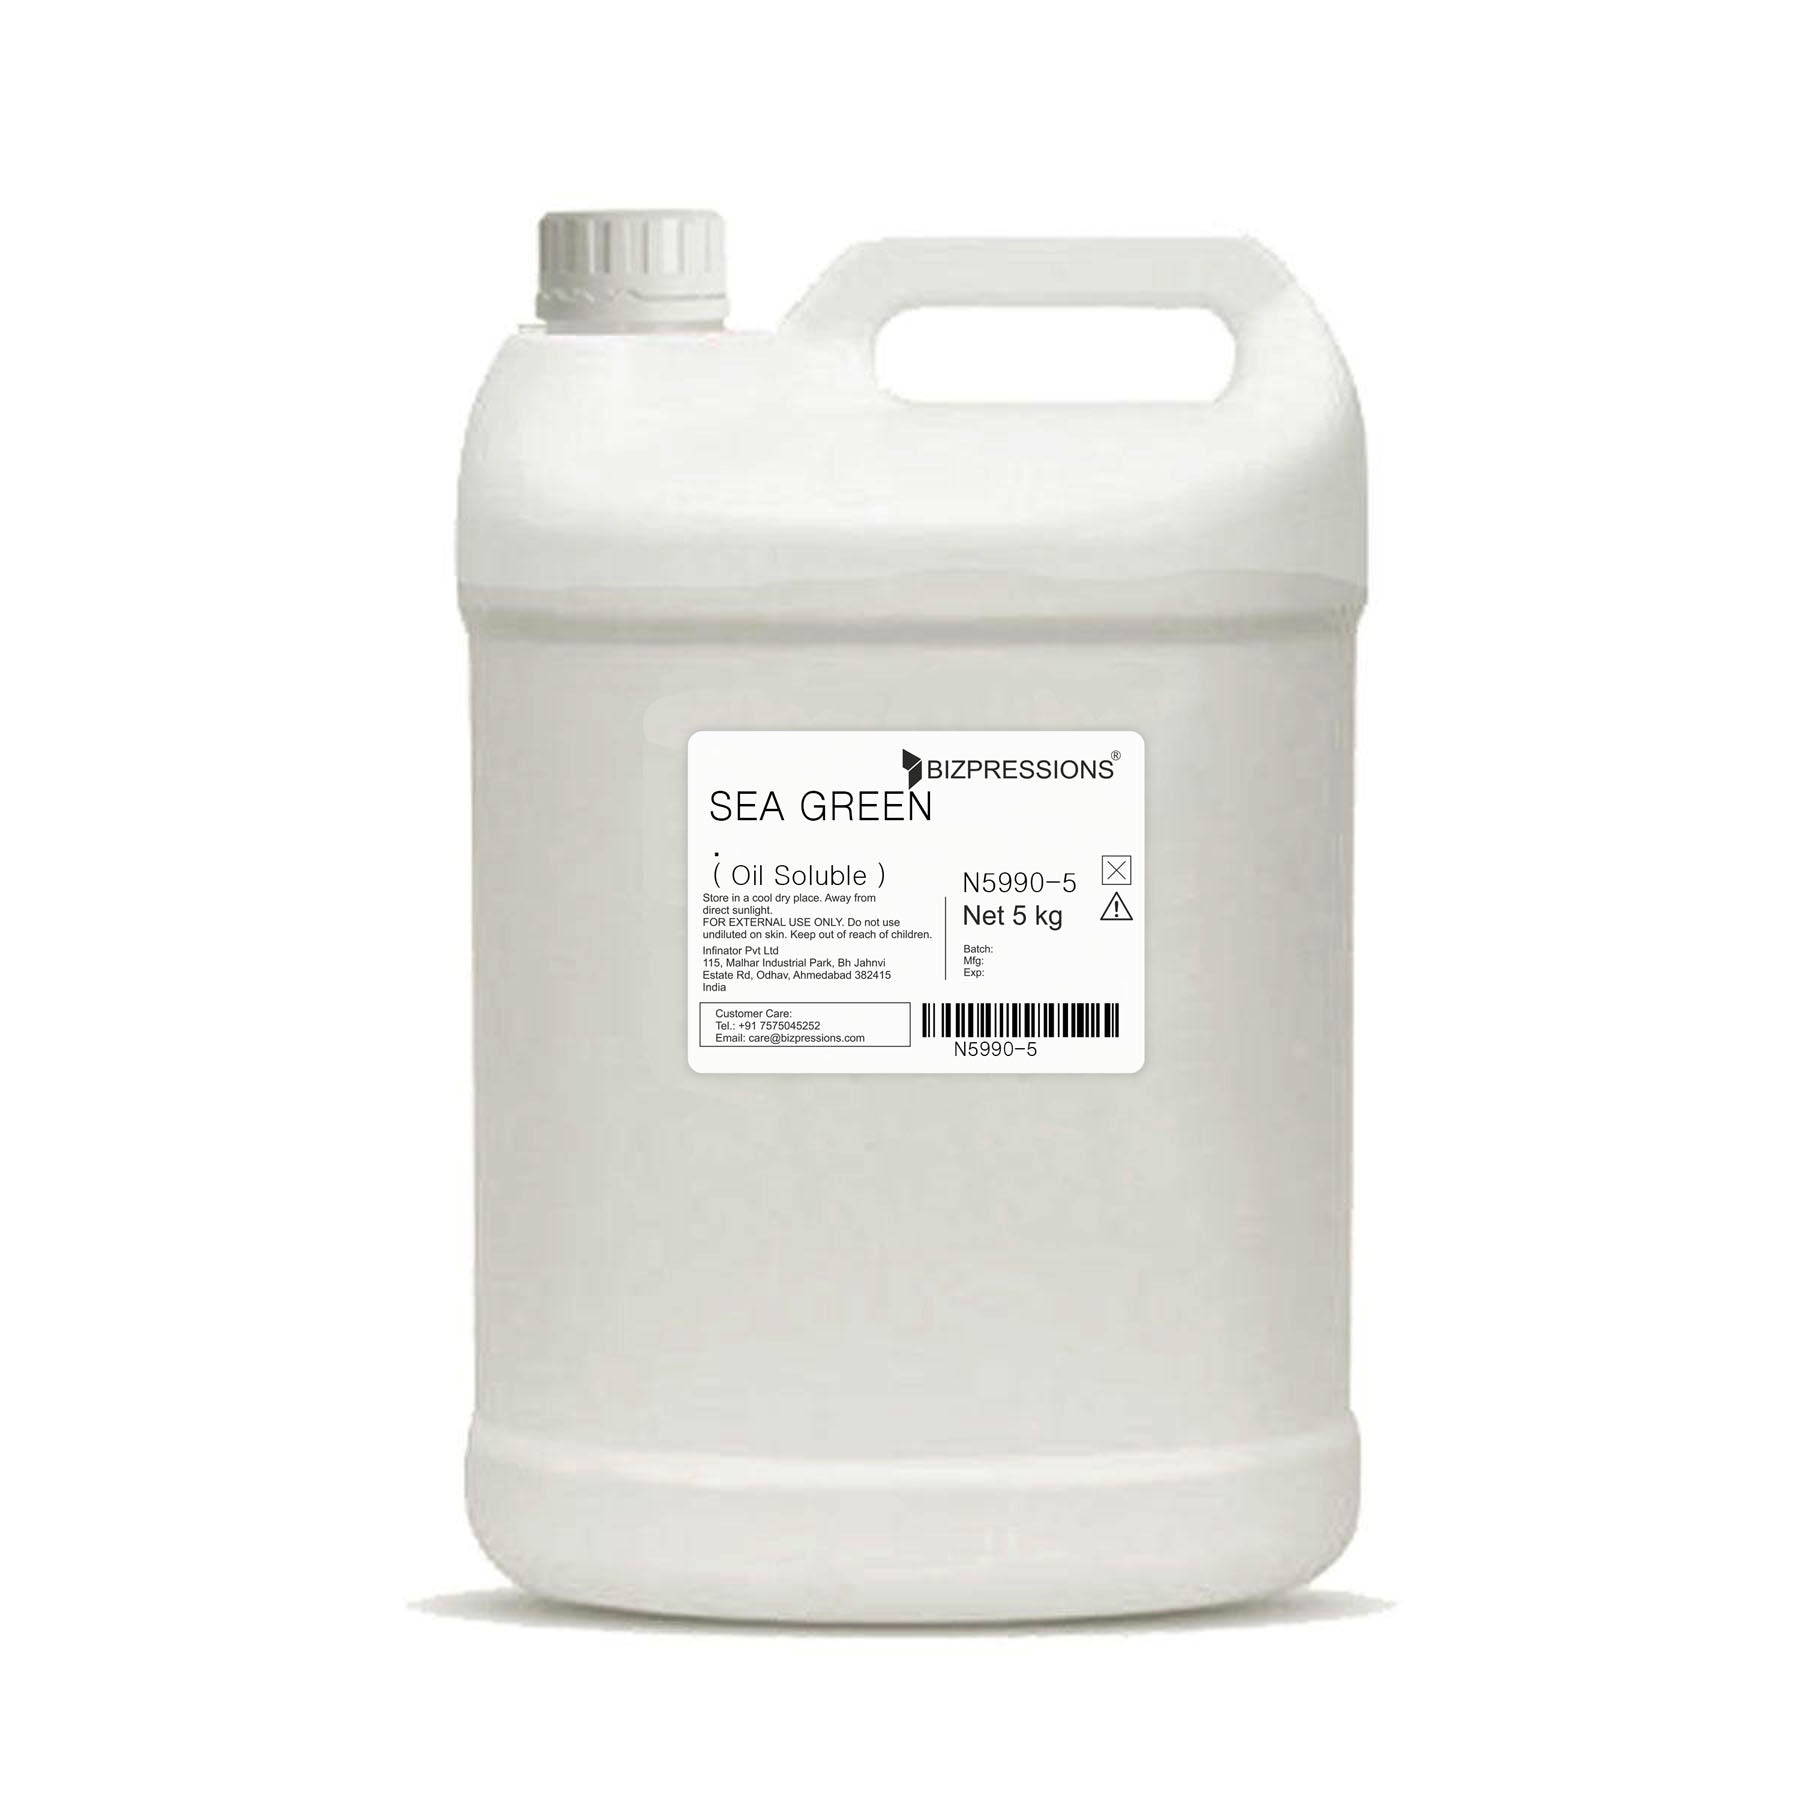 SEA GREEN - Fragrance ( Oil Soluble ) - 5 kg